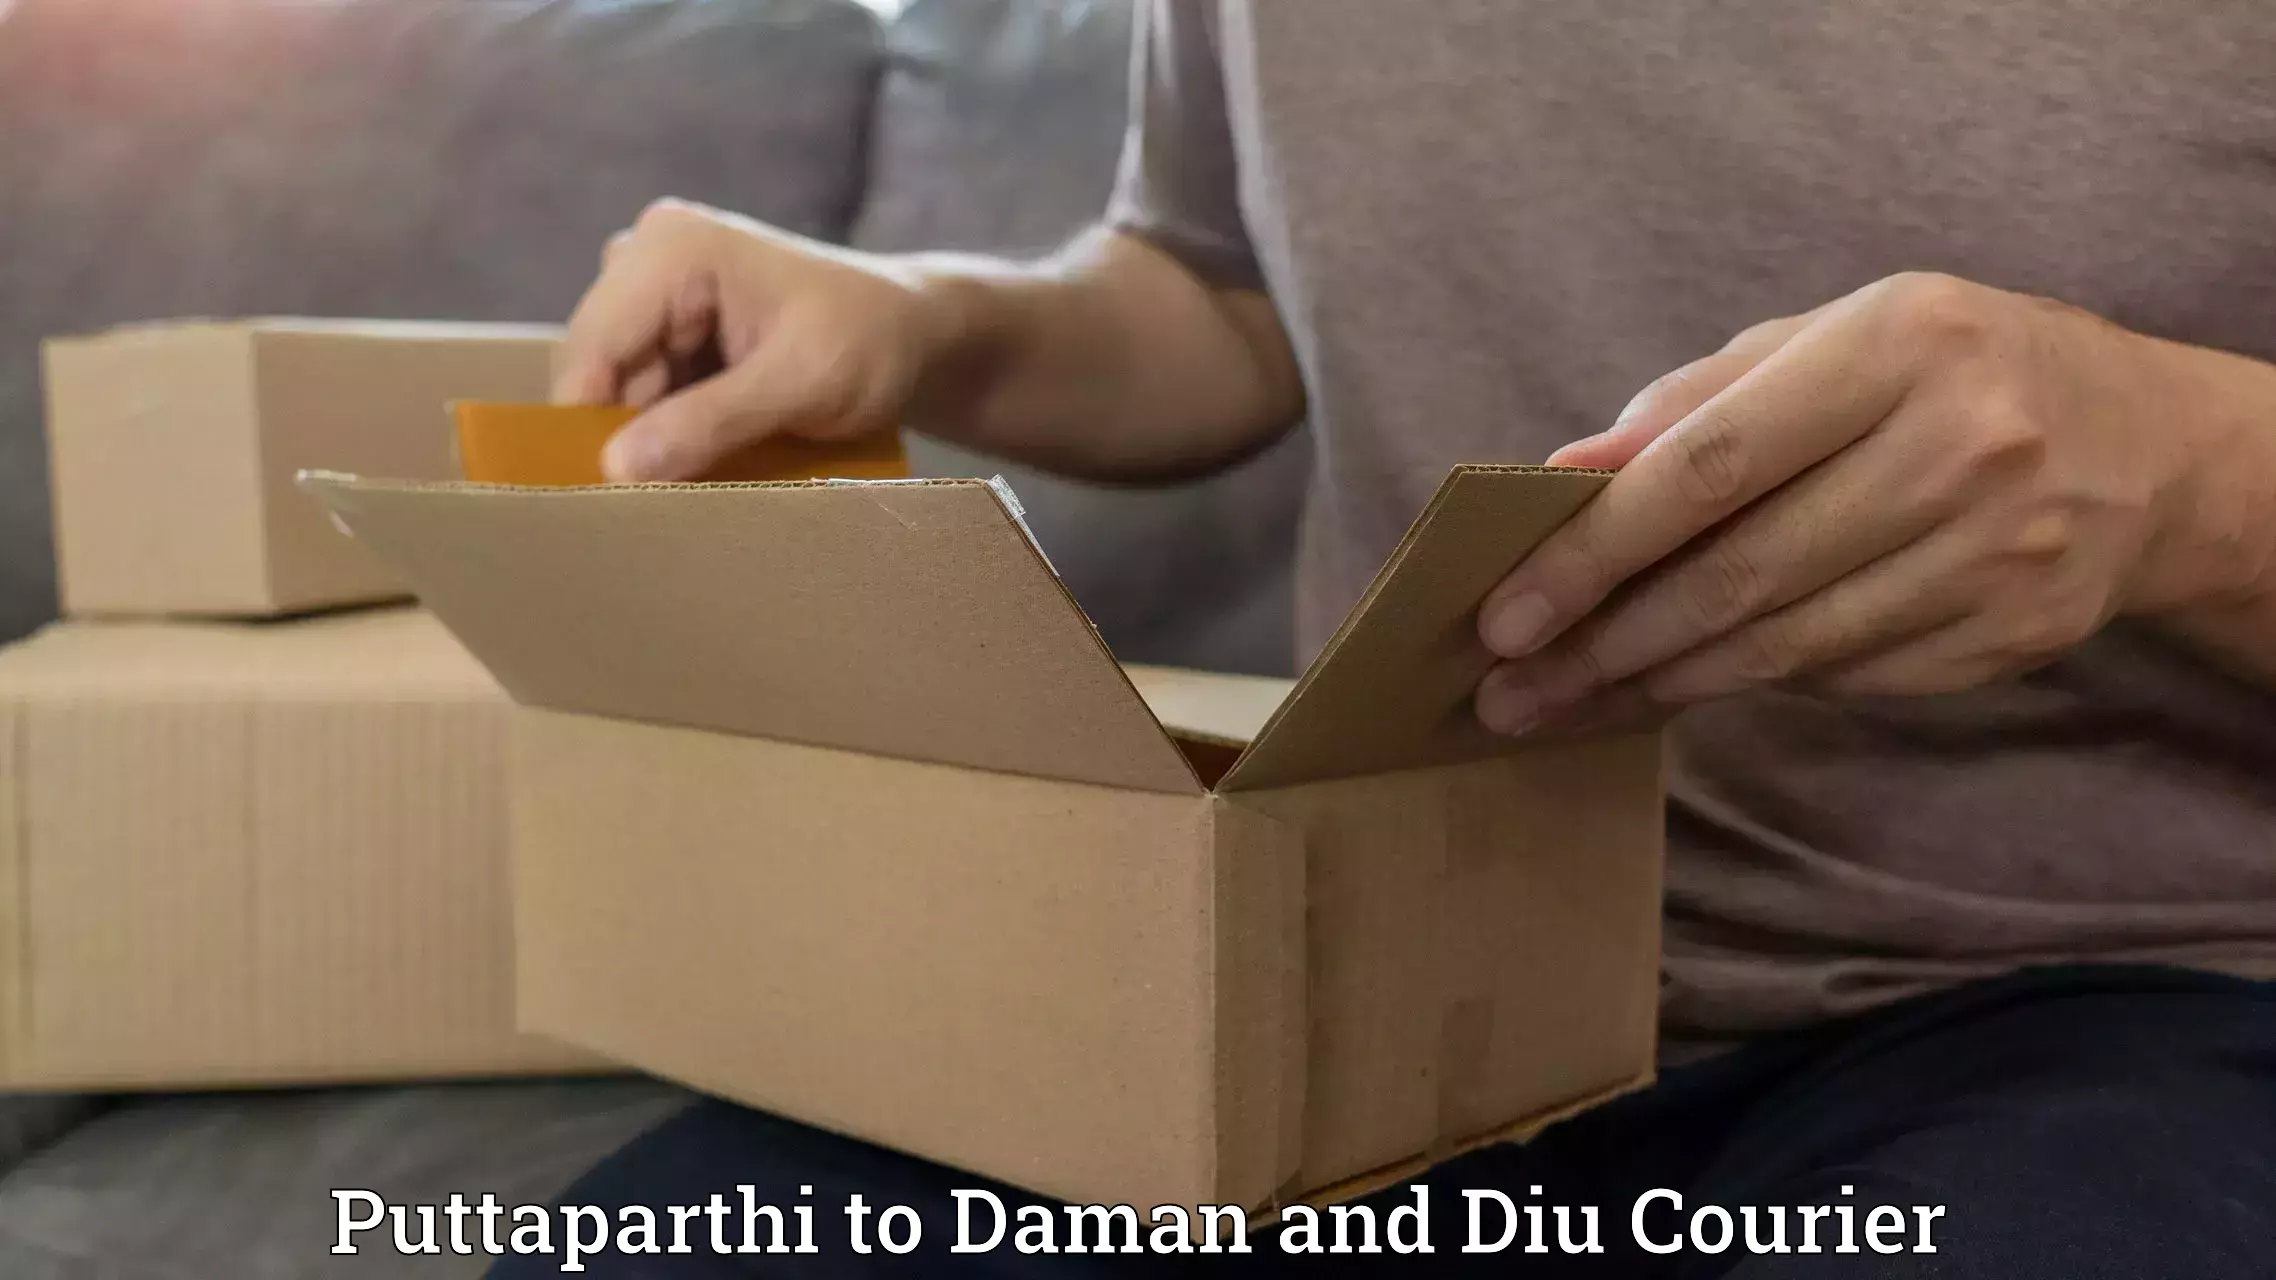 Easy return solutions Puttaparthi to Daman